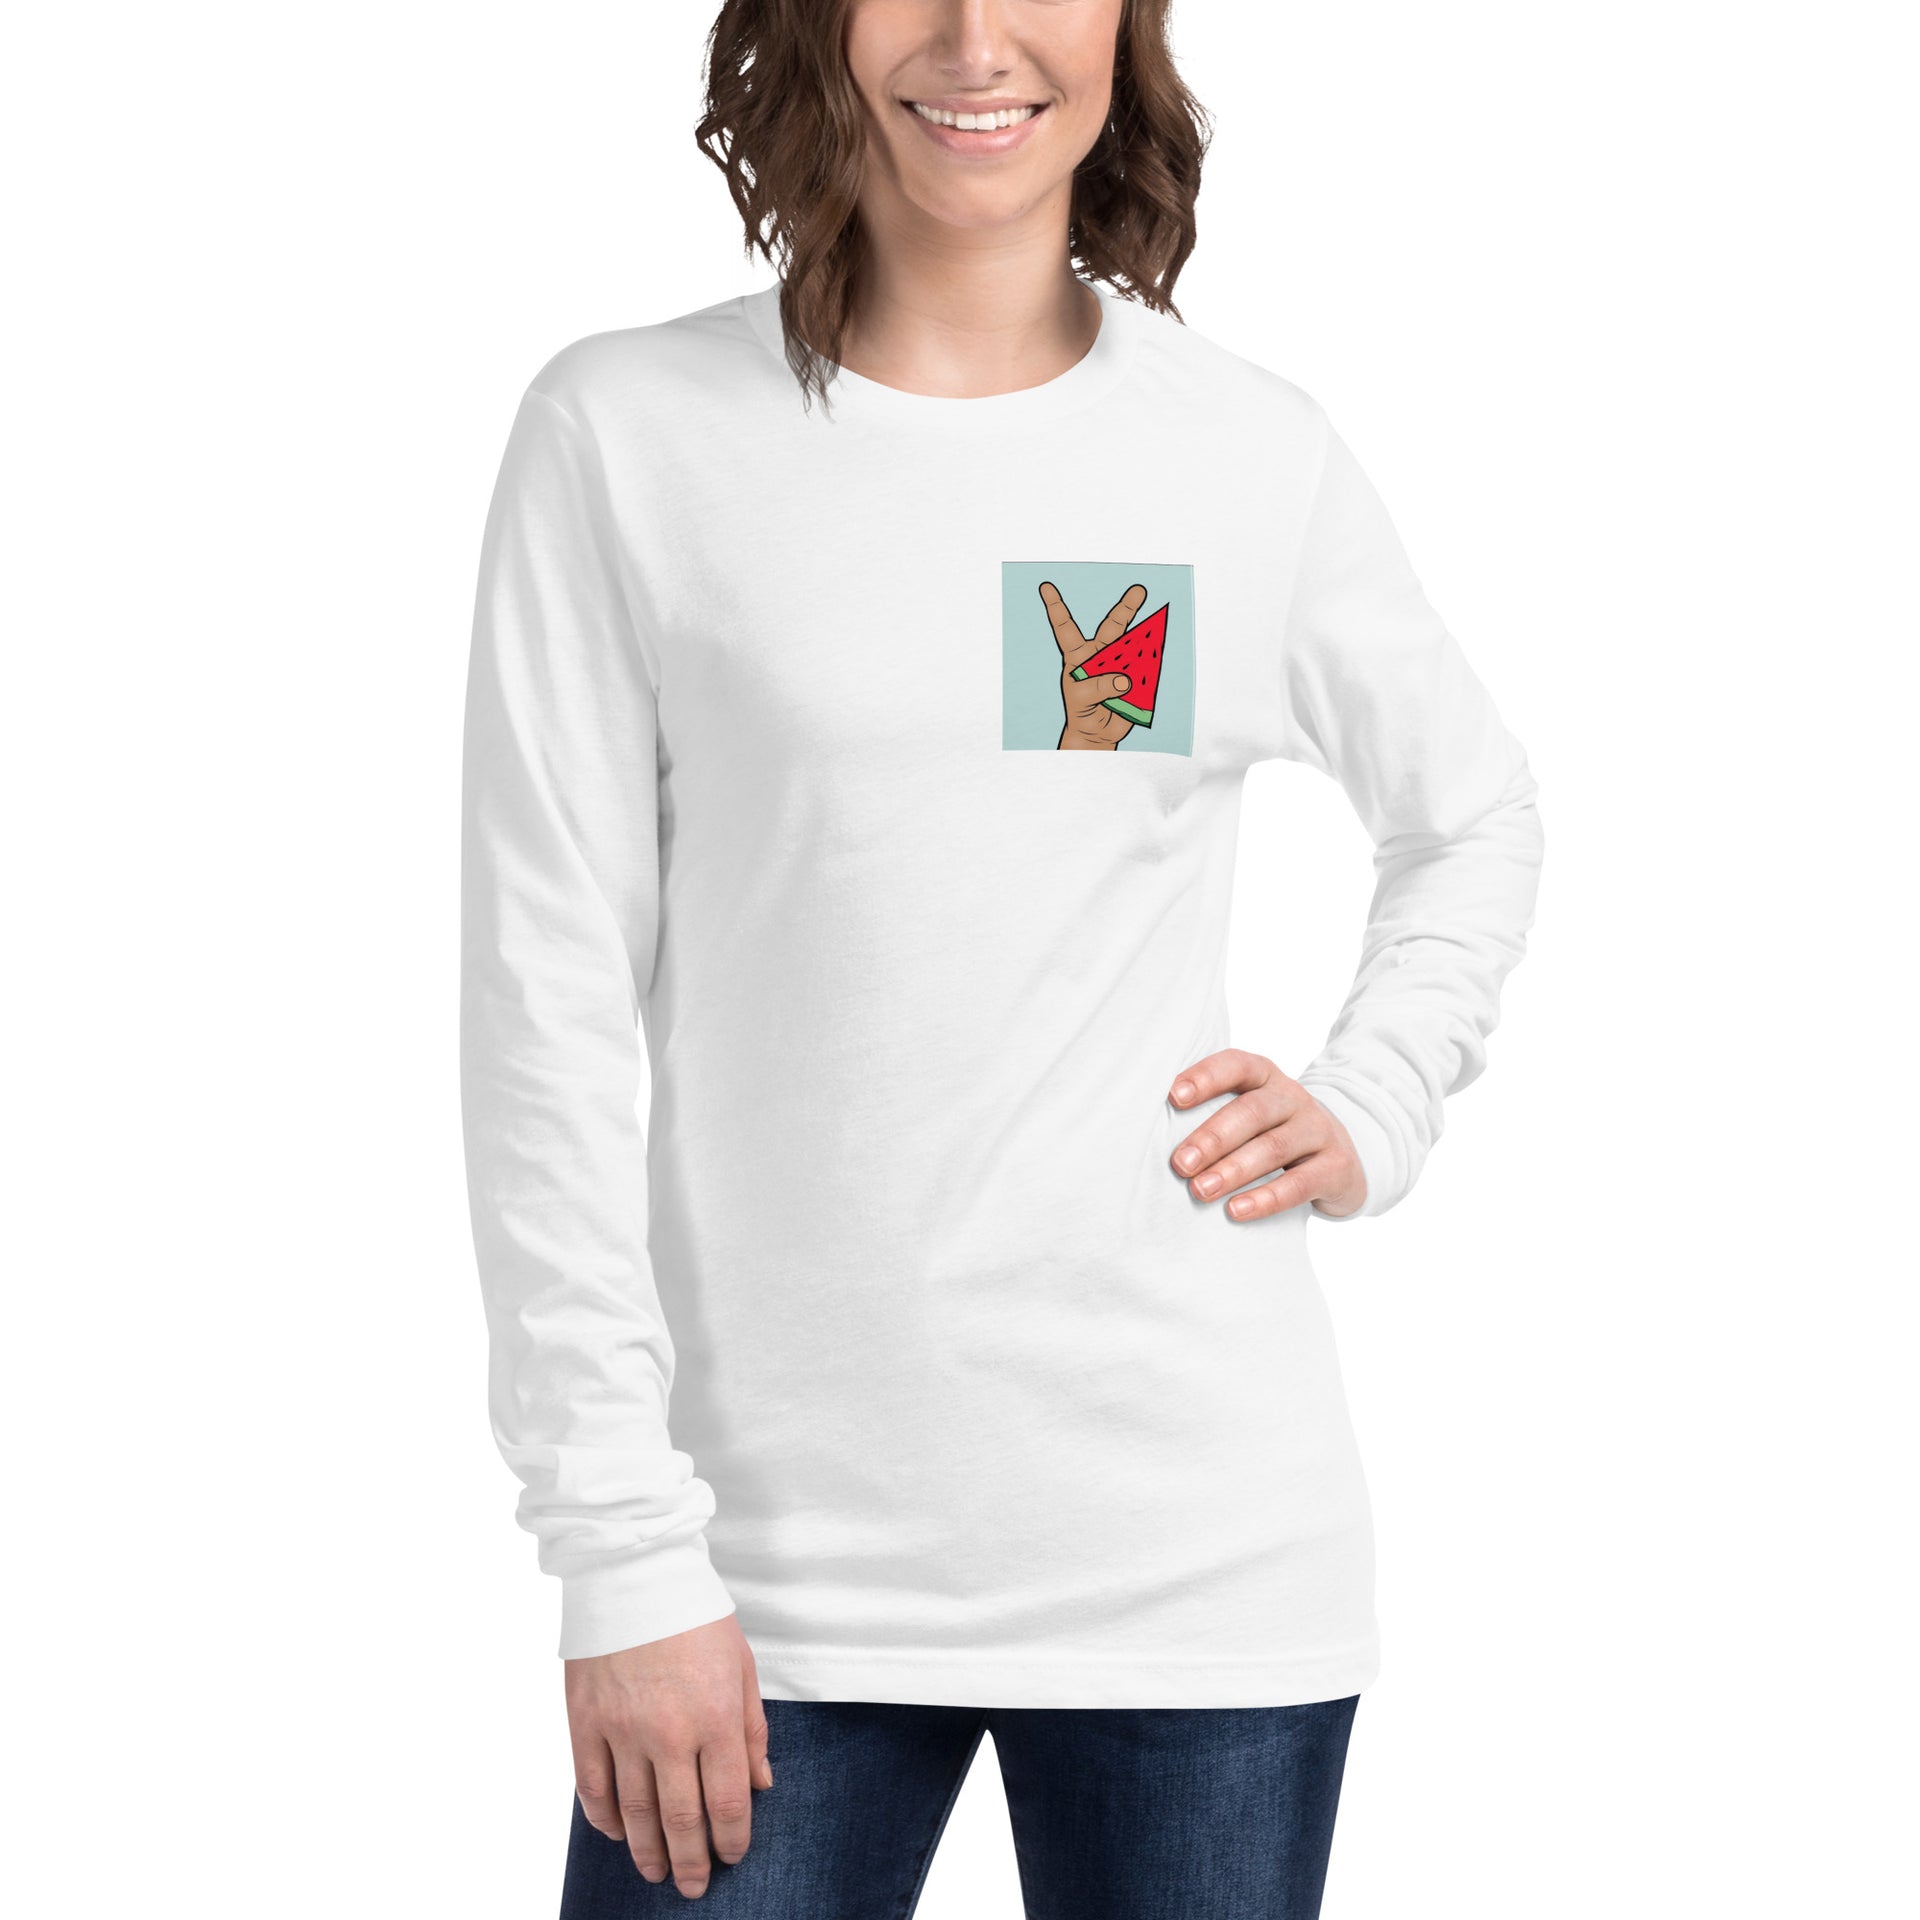 Tee – Watermelon Long Sleeve shirt Unisex